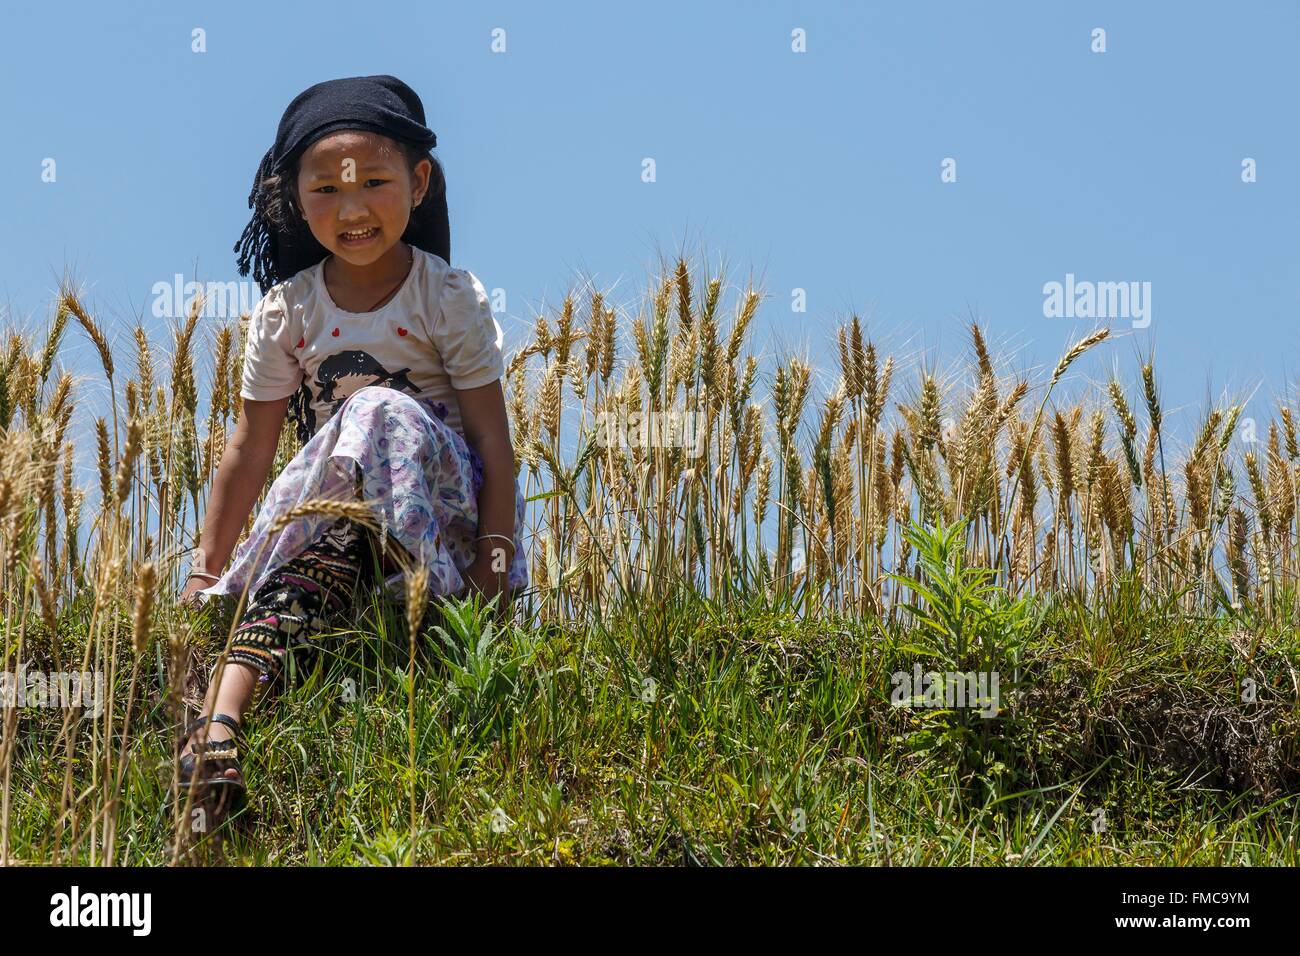 Nepal, Bagmati zone, Chunikel, young girl before a wheat field Stock Photo